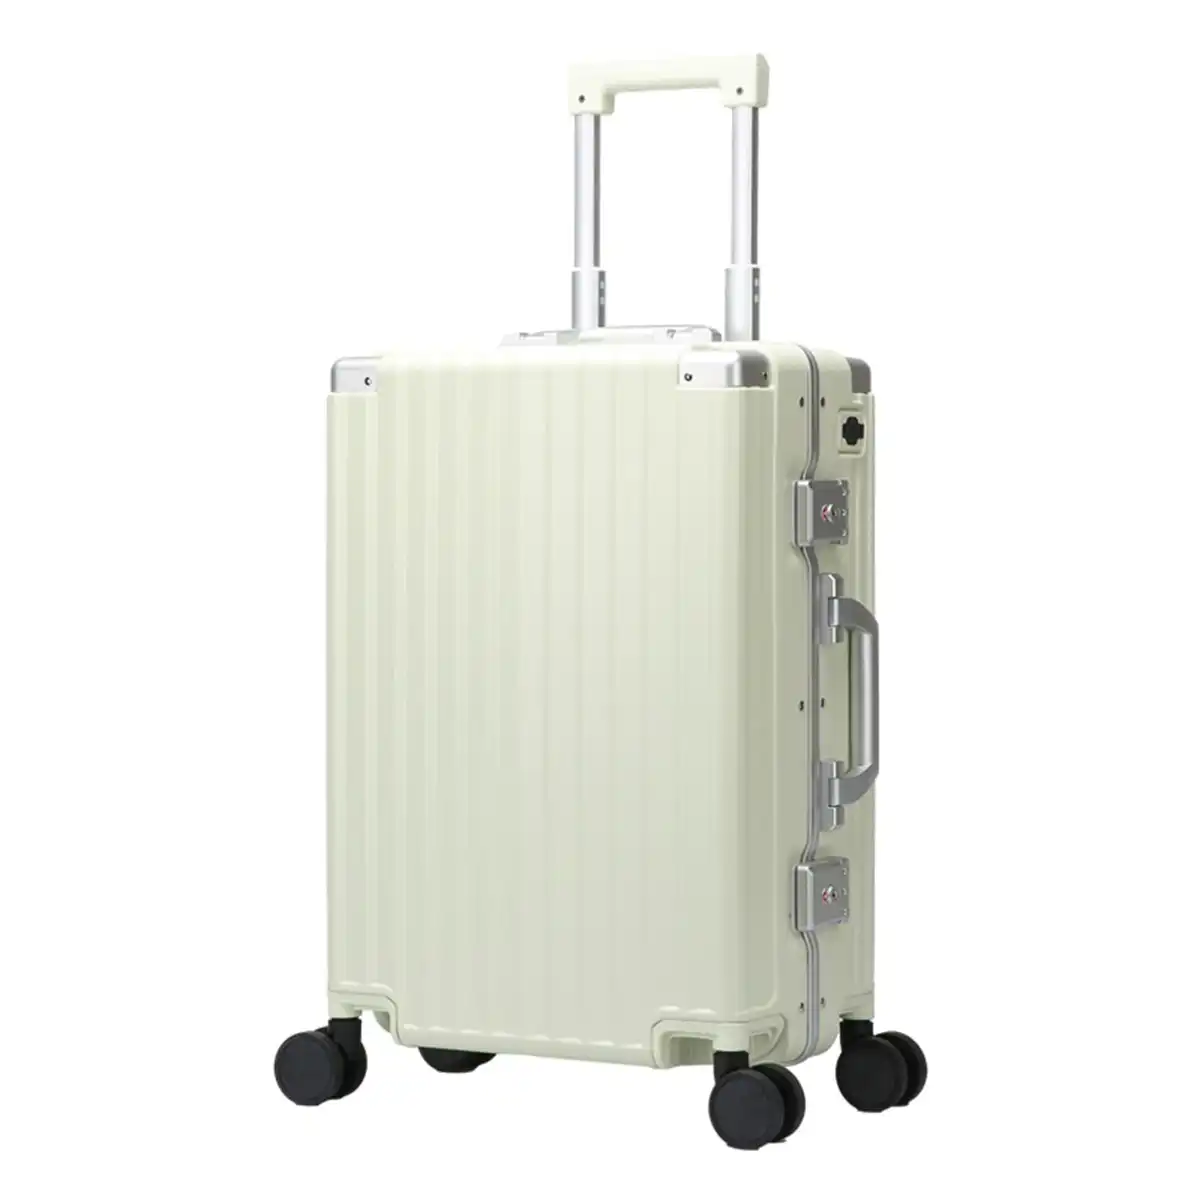 Bopai Aluminium Frame Luggage Suitcase Lightweight with TSA locker 8 wheels HardCase B9263